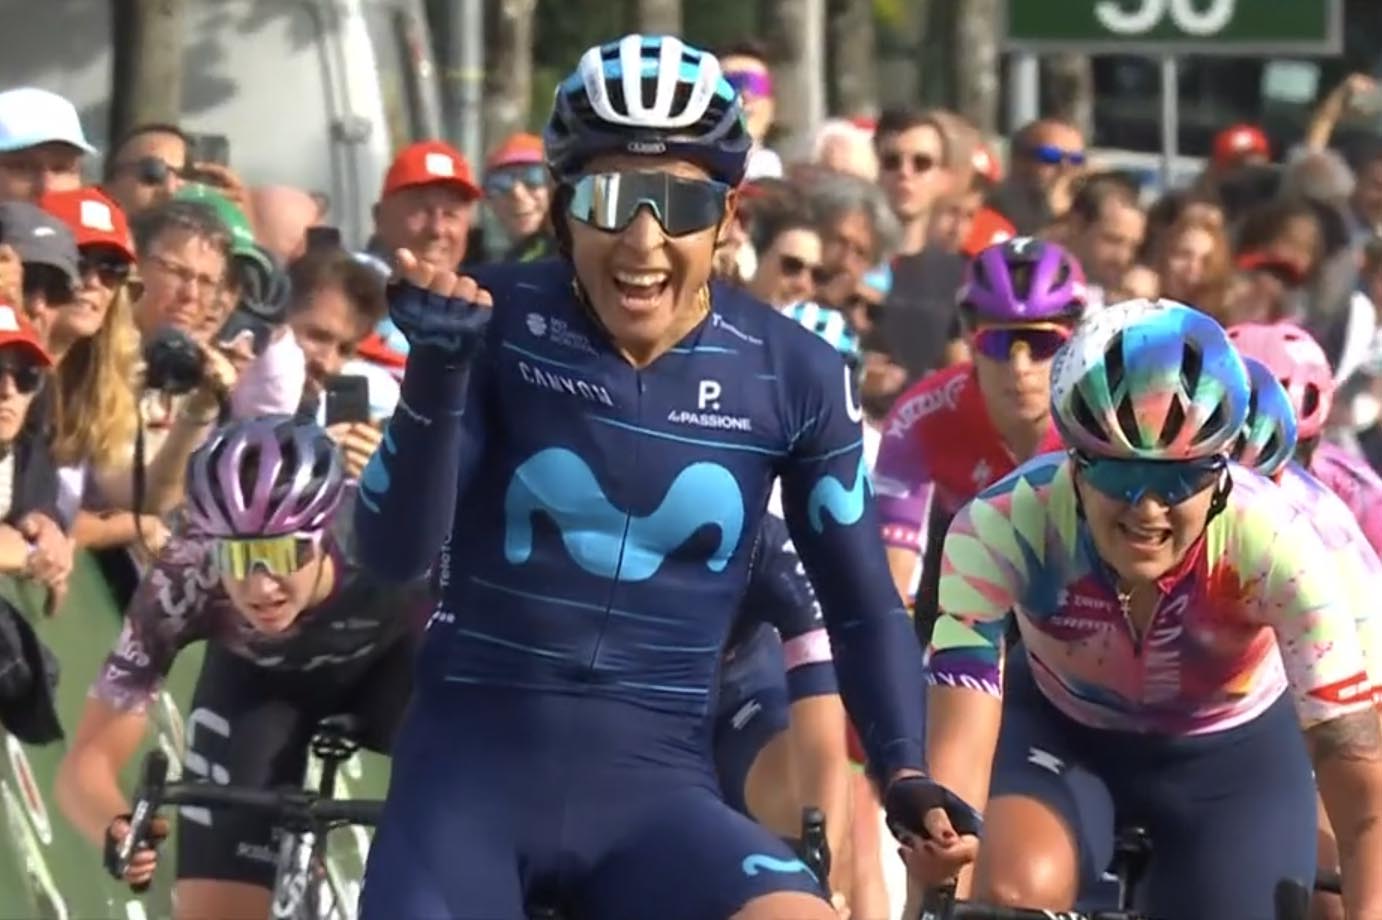 Arlenis Sierra vince la prima tappa del Tour de Romandie Feminin 2022